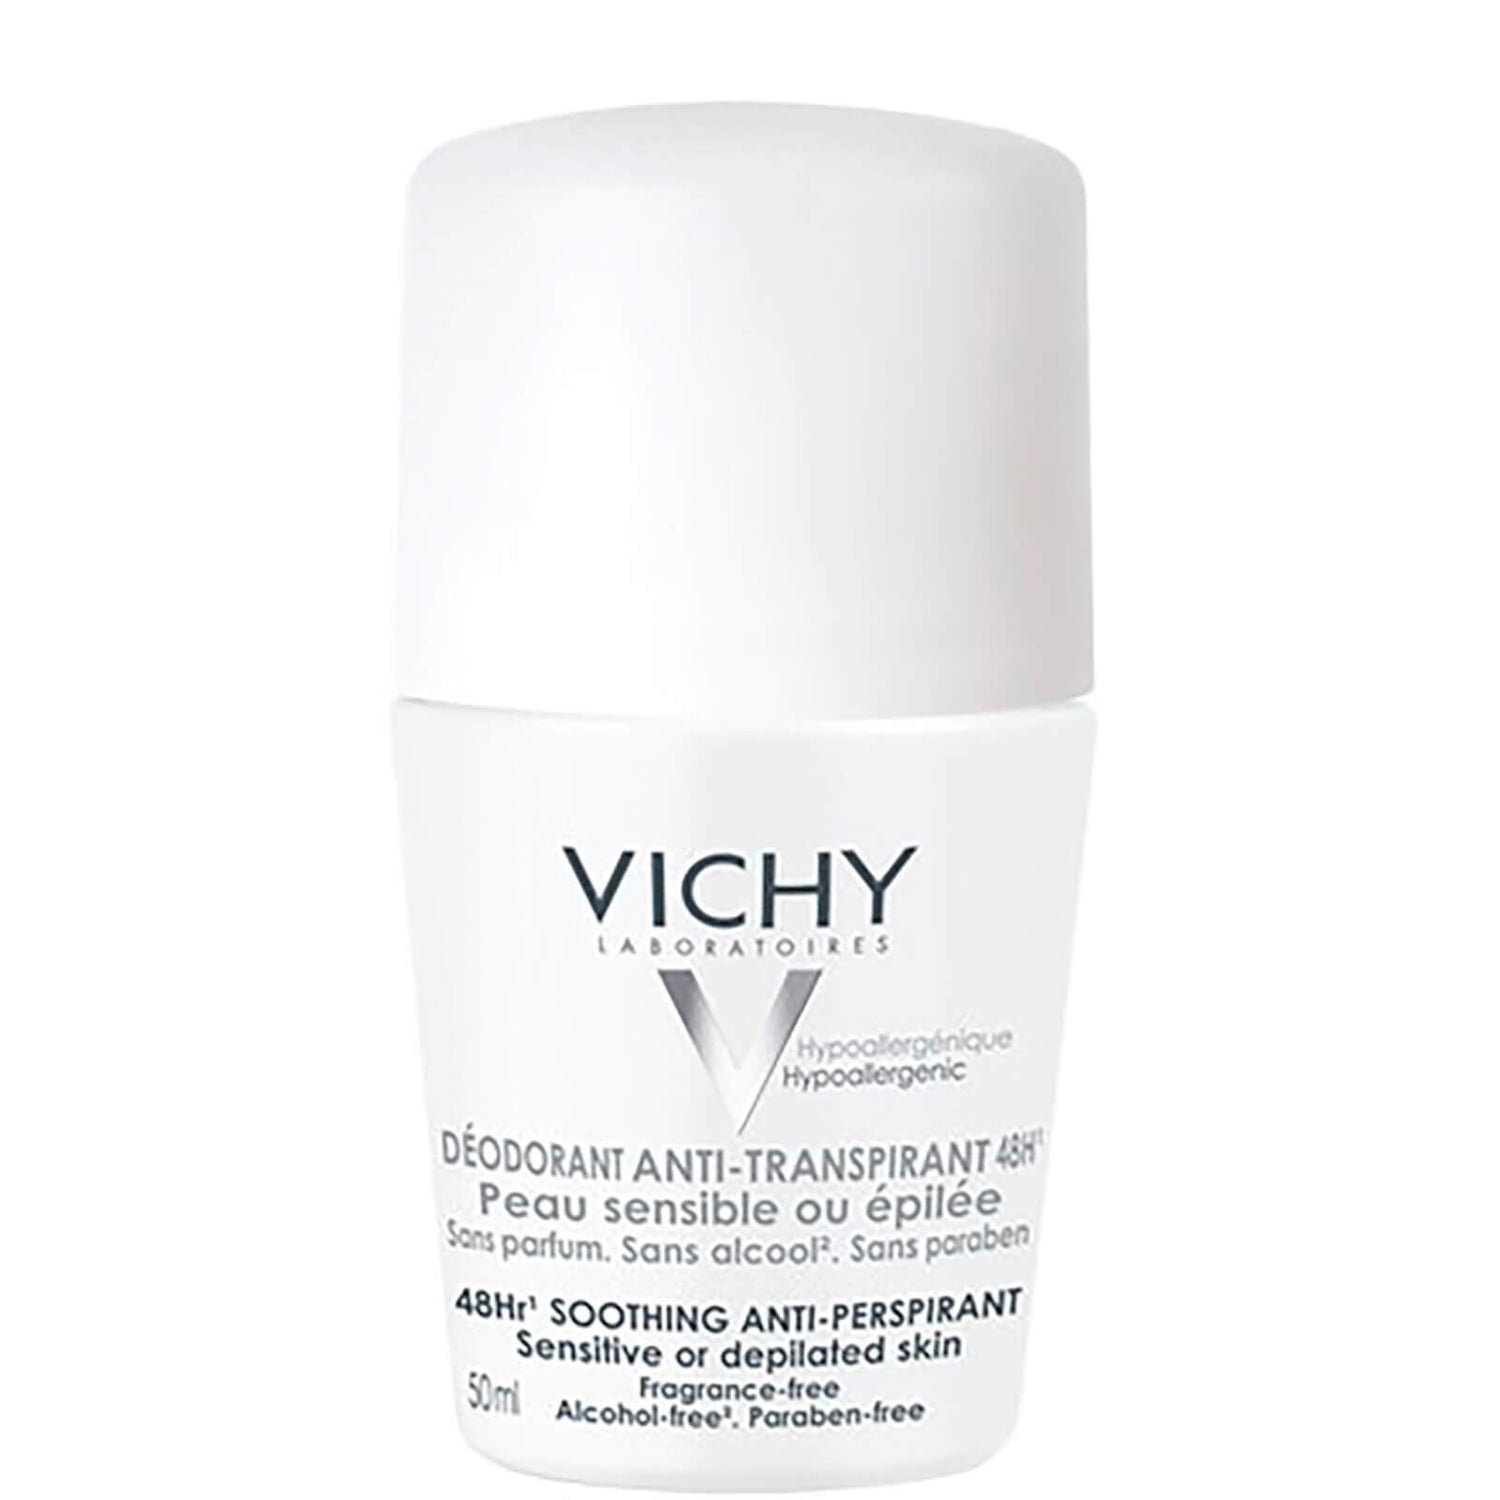 Vichy Roll-On déodrant anti-transpirant 48H peau sensible 50ml